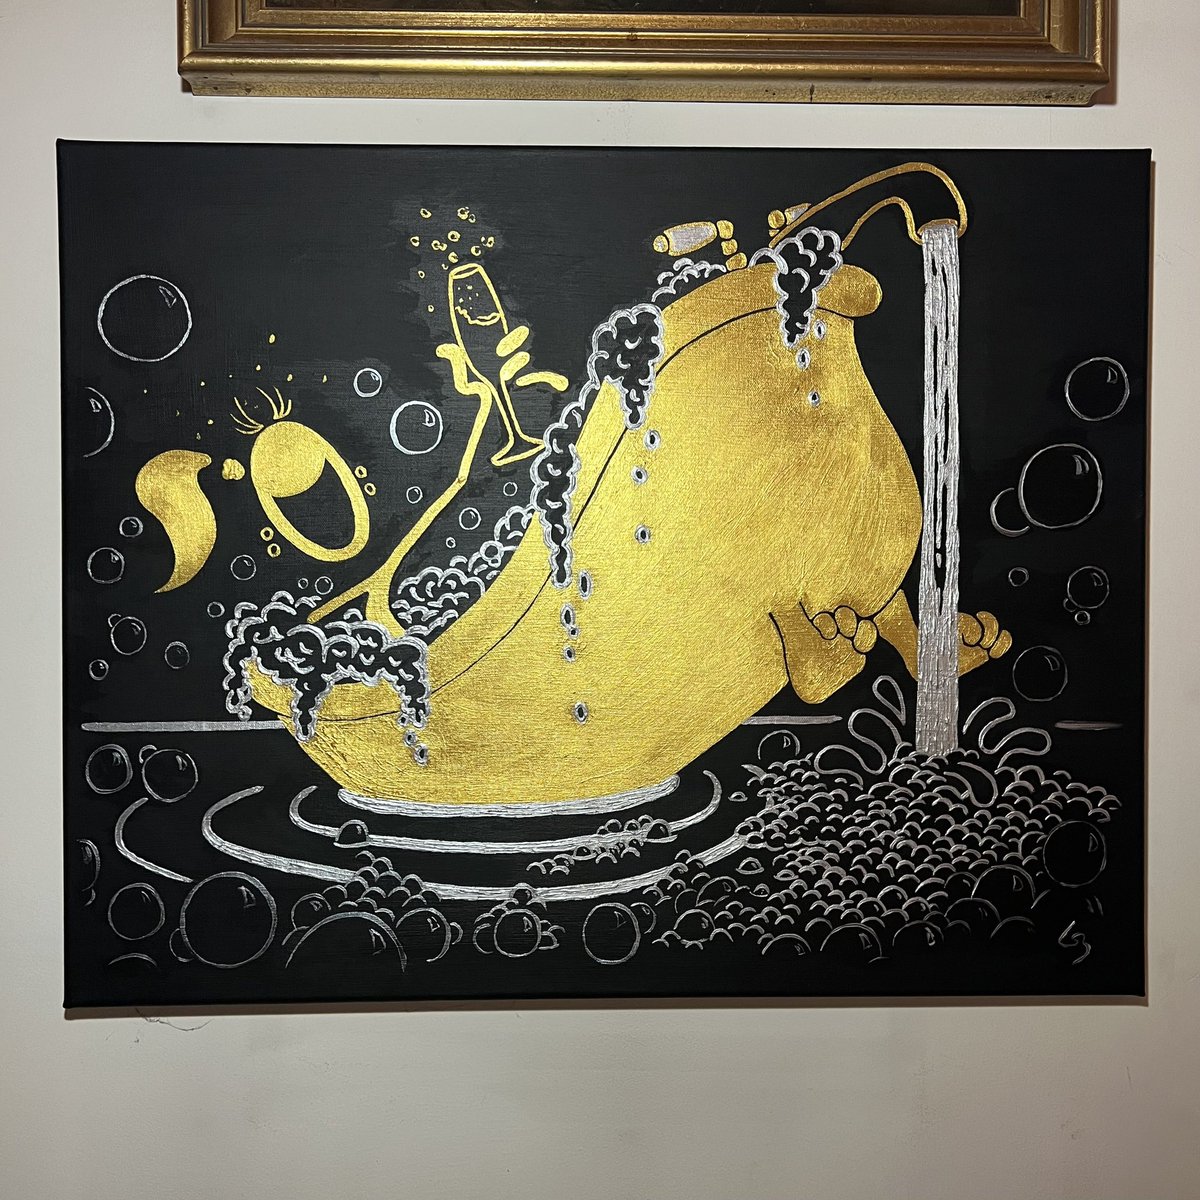 “Bubble Trouble” by Gary Blehm #wallart #wallpainting #galleryart #acryliconcanvas #bath #clawfootedbathtub #champage #decor #GaryBlehm #art PENMEN.com